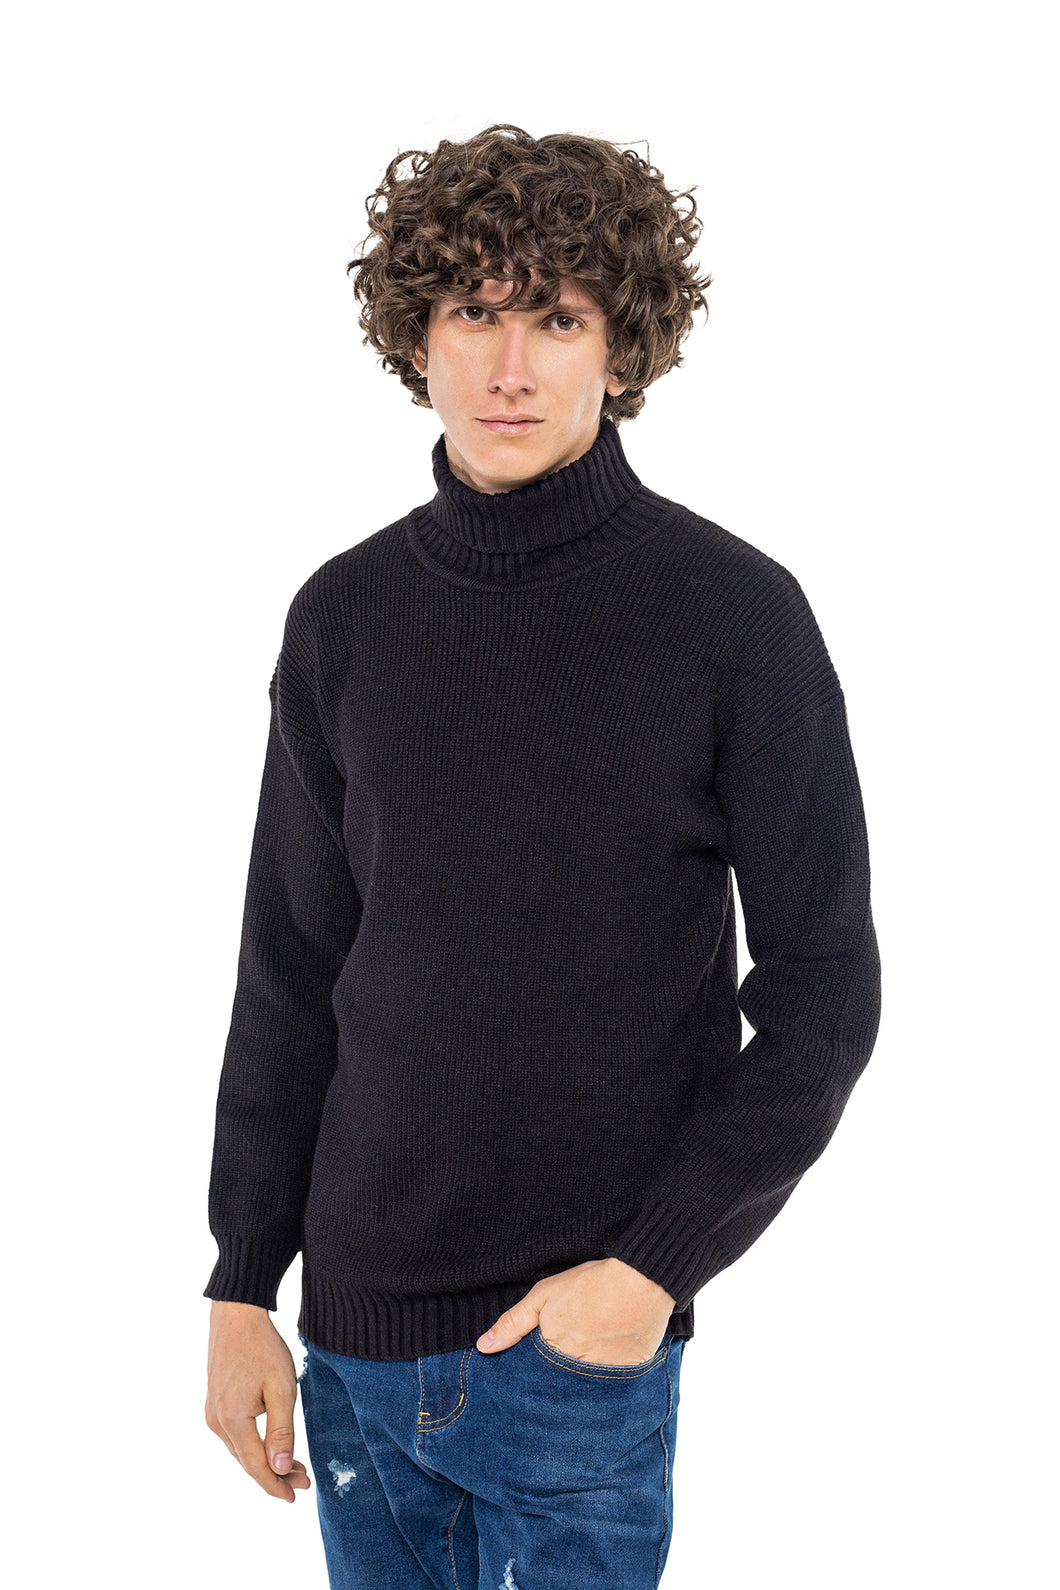 Sweater Cuello Alto Para hombre